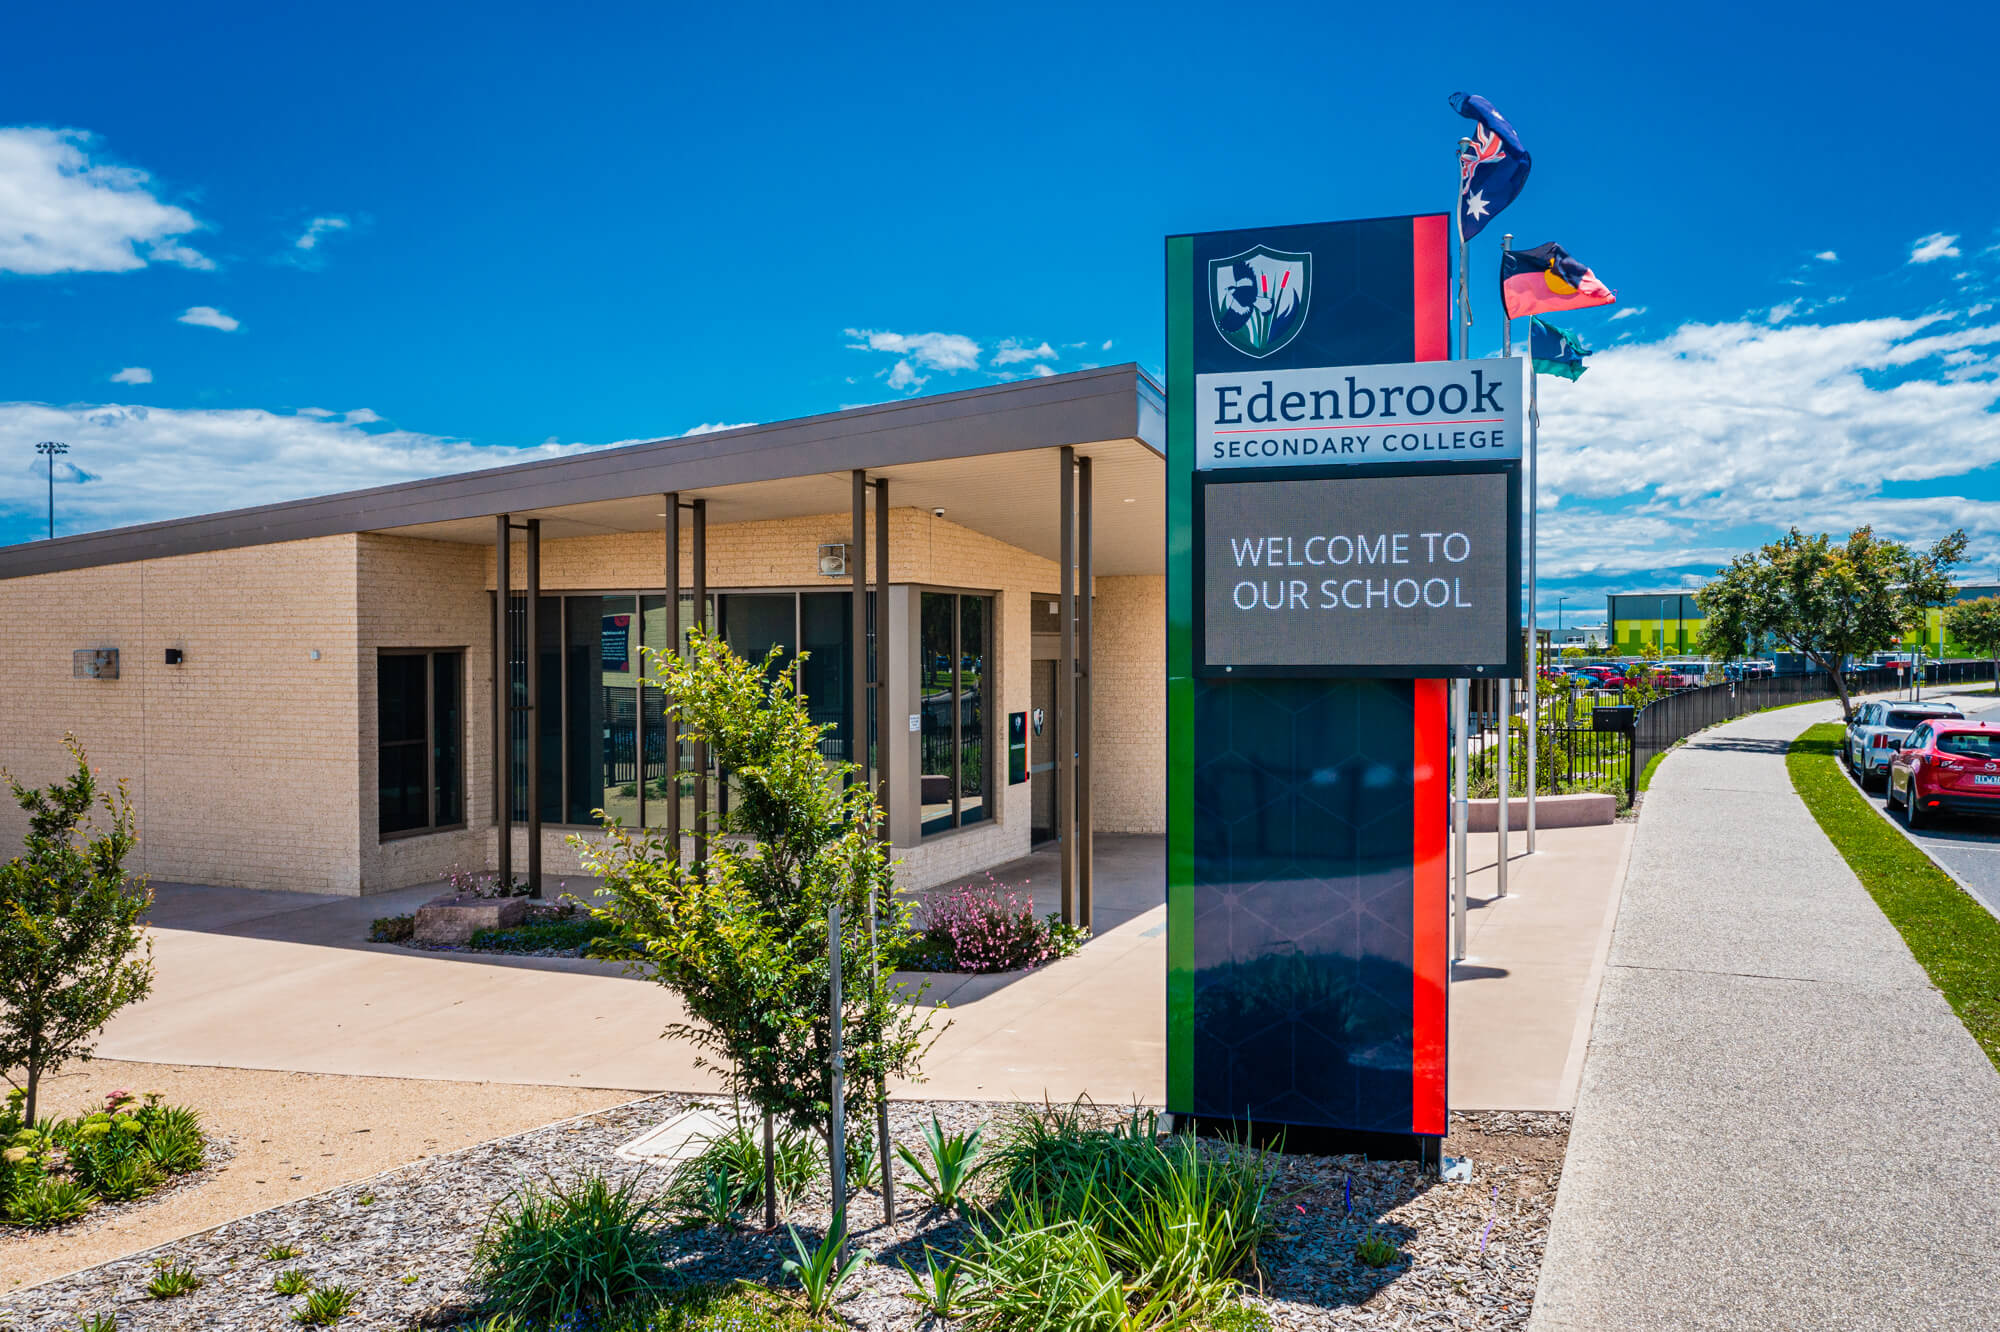 Edenbrook Secondary College